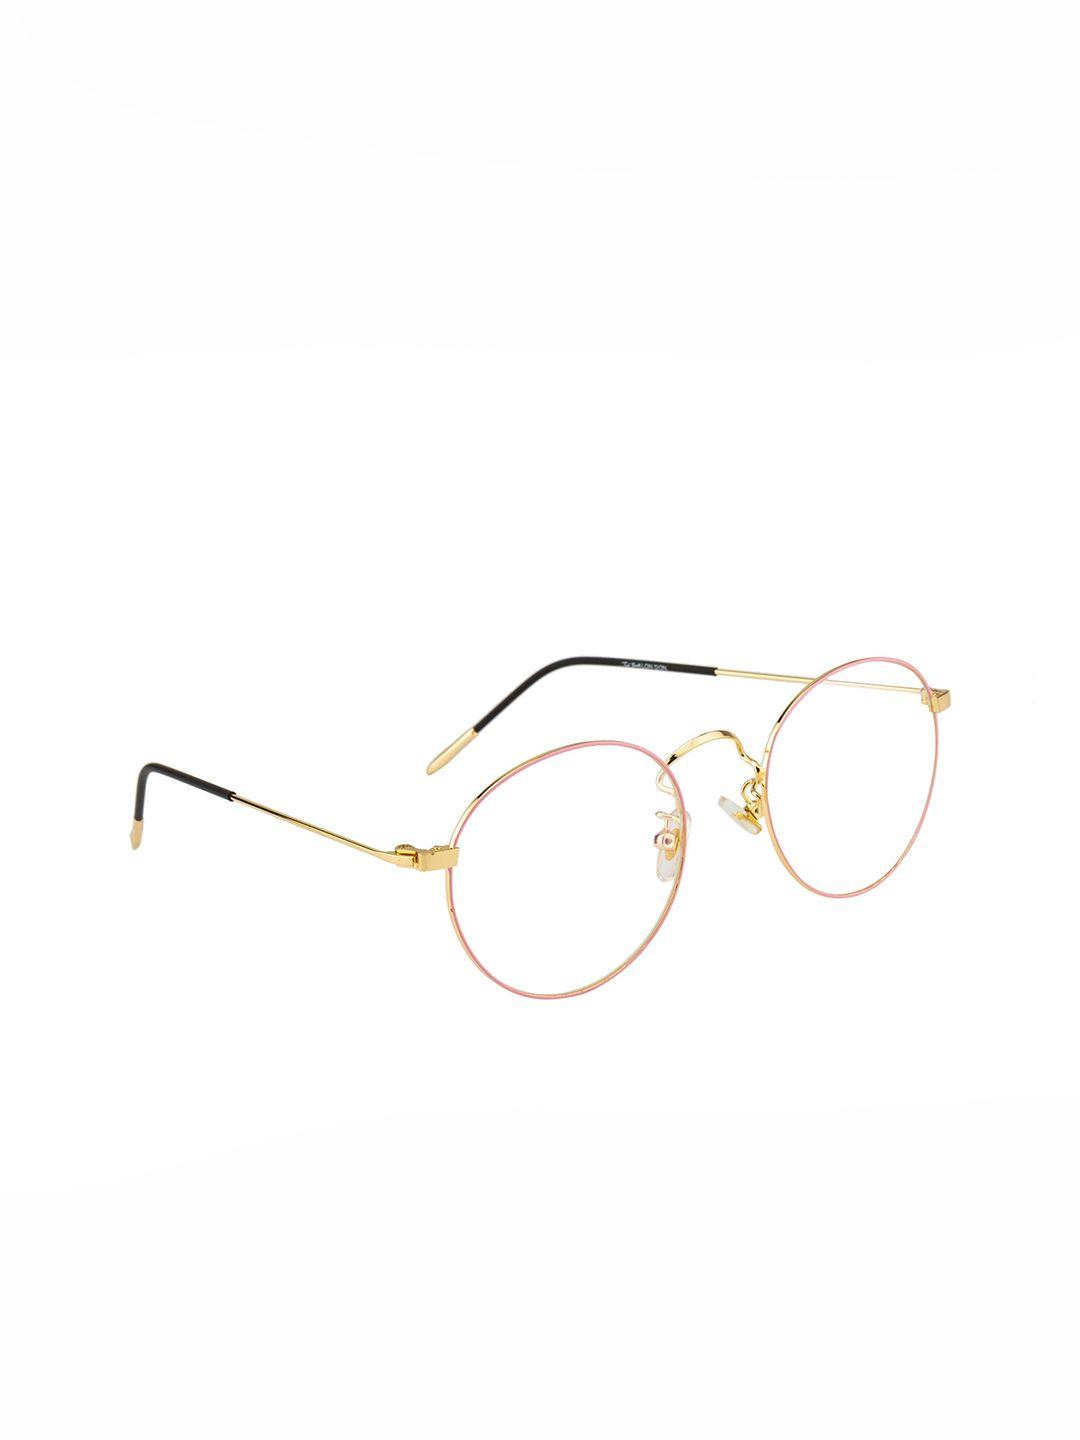 ted smith unisex gold-toned & black full rim round frames eyeglasses